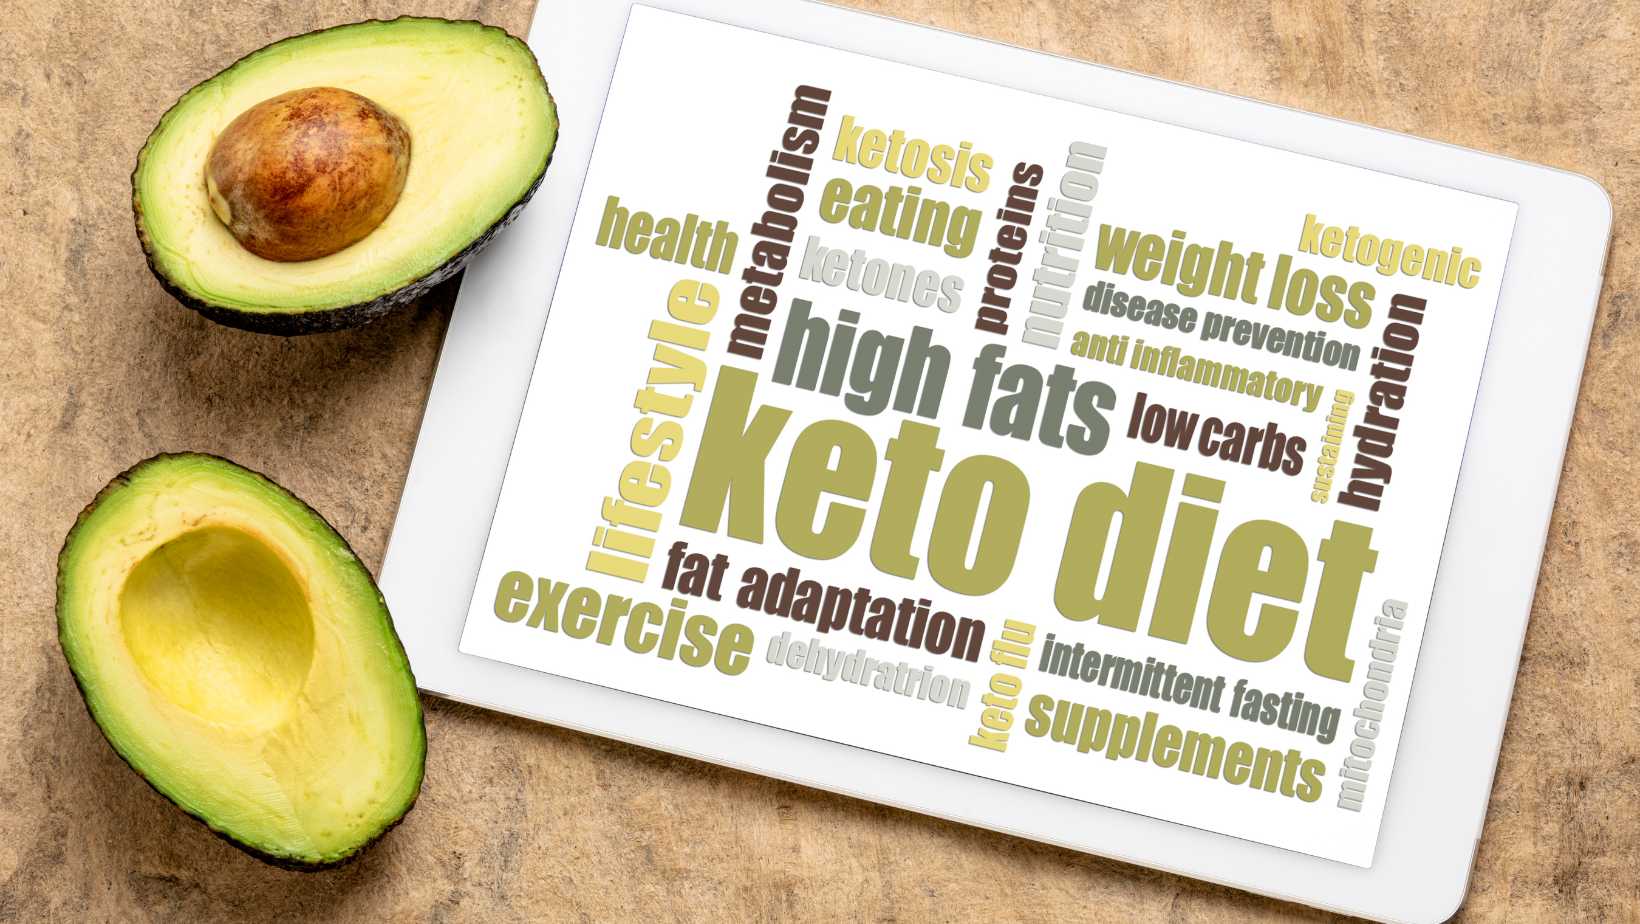 keto diet book for beginners